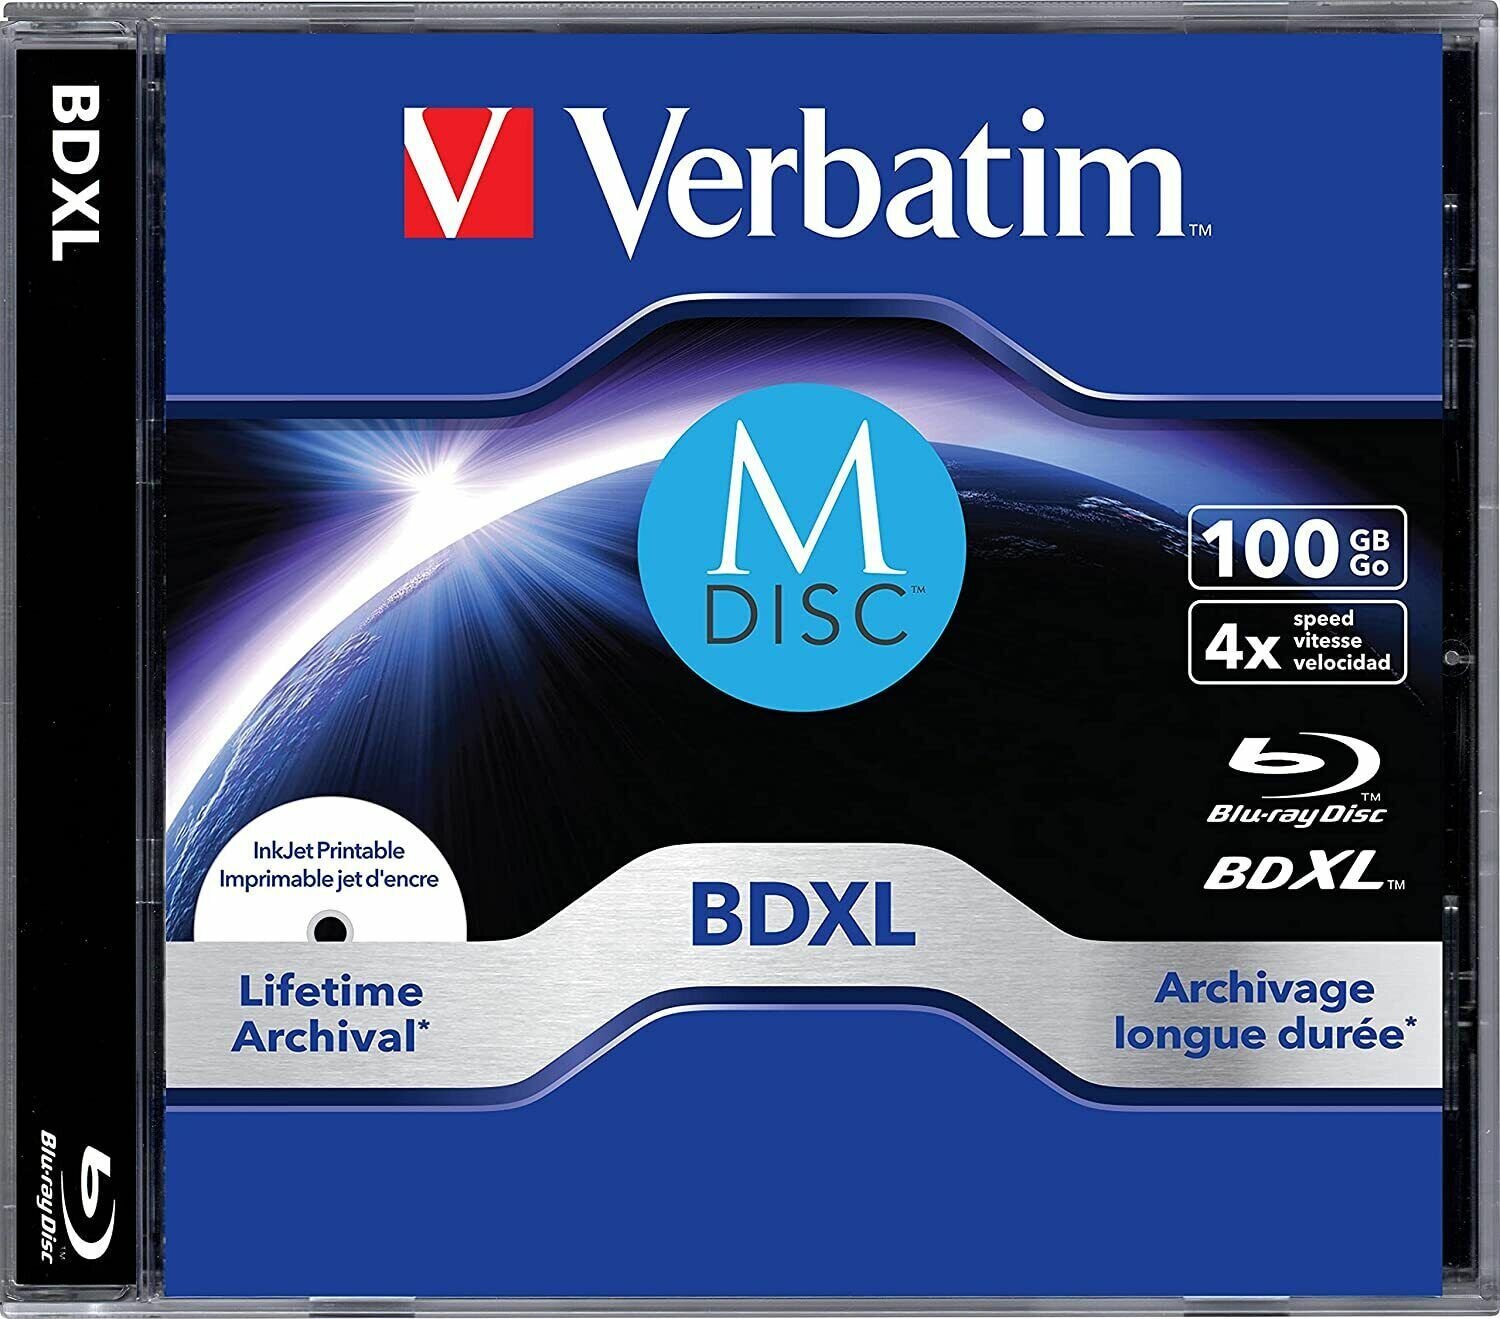 Диск Blu-ray M-DISC Verbatim 43833 BDXL 100Gb 1шт Jewel Case Printable